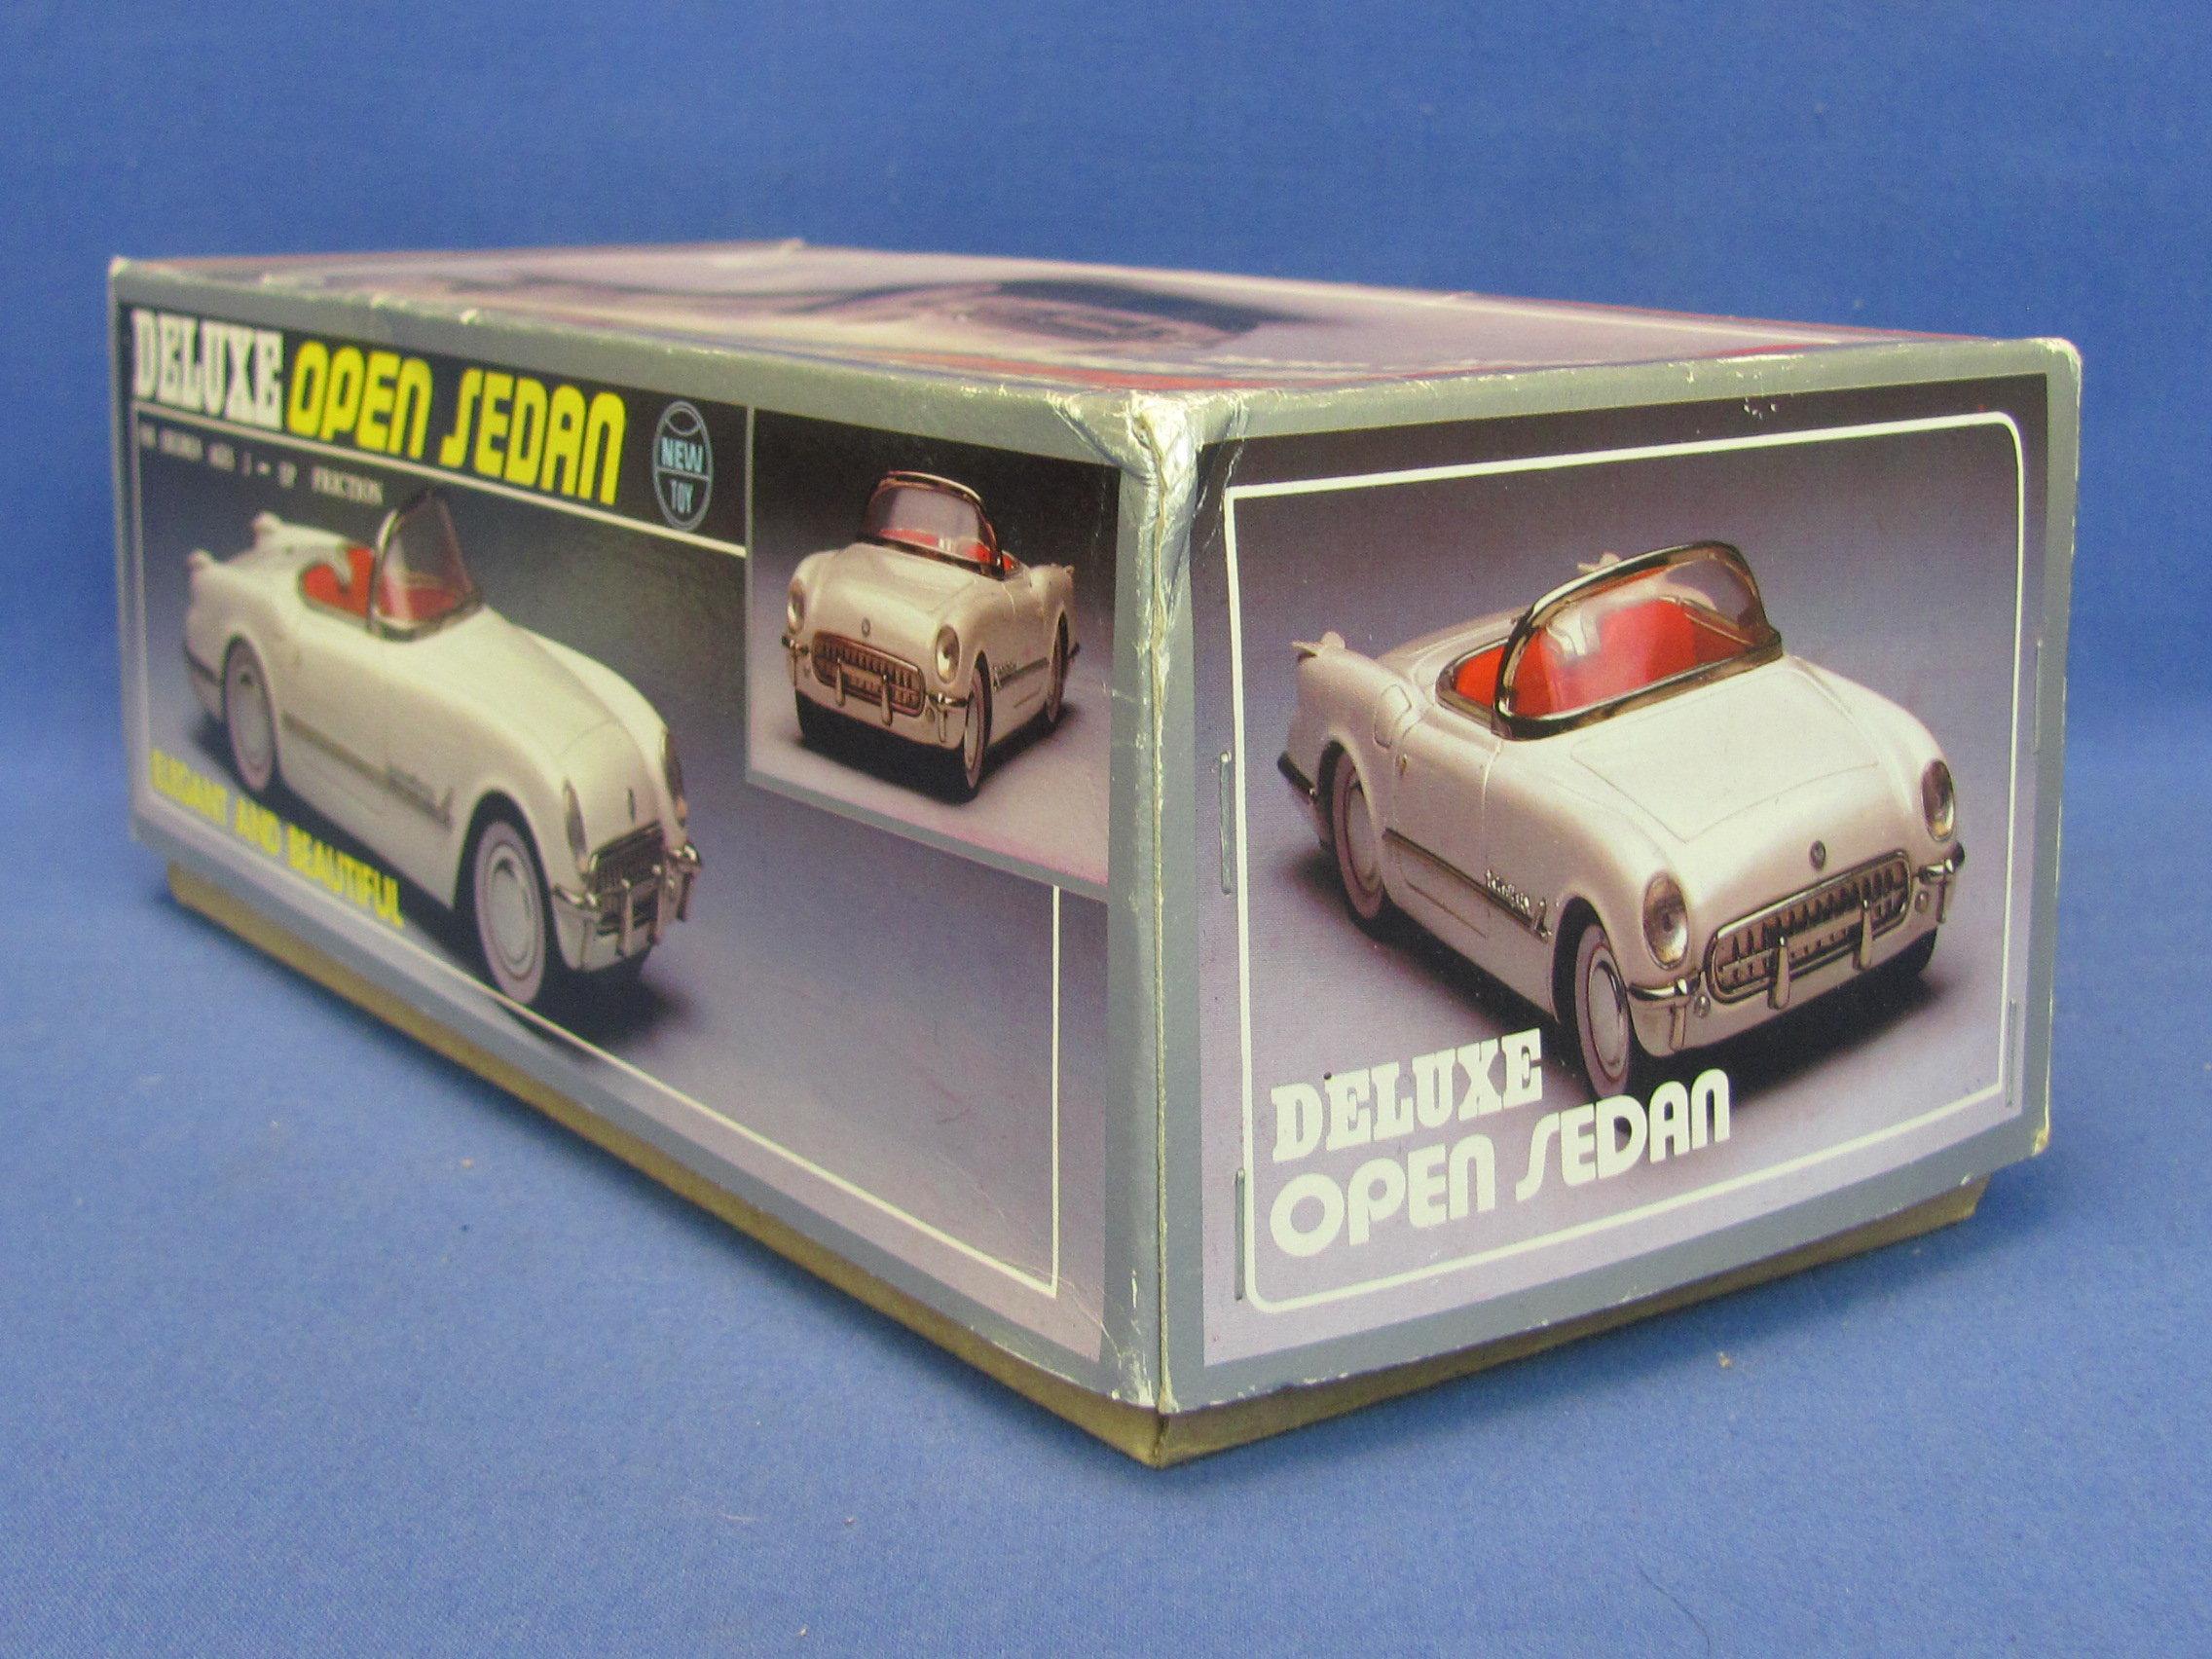 Deluxe Open Sedan – Toy Friction Car – Metal & Plastic – 9 1/2” long – In Original Box